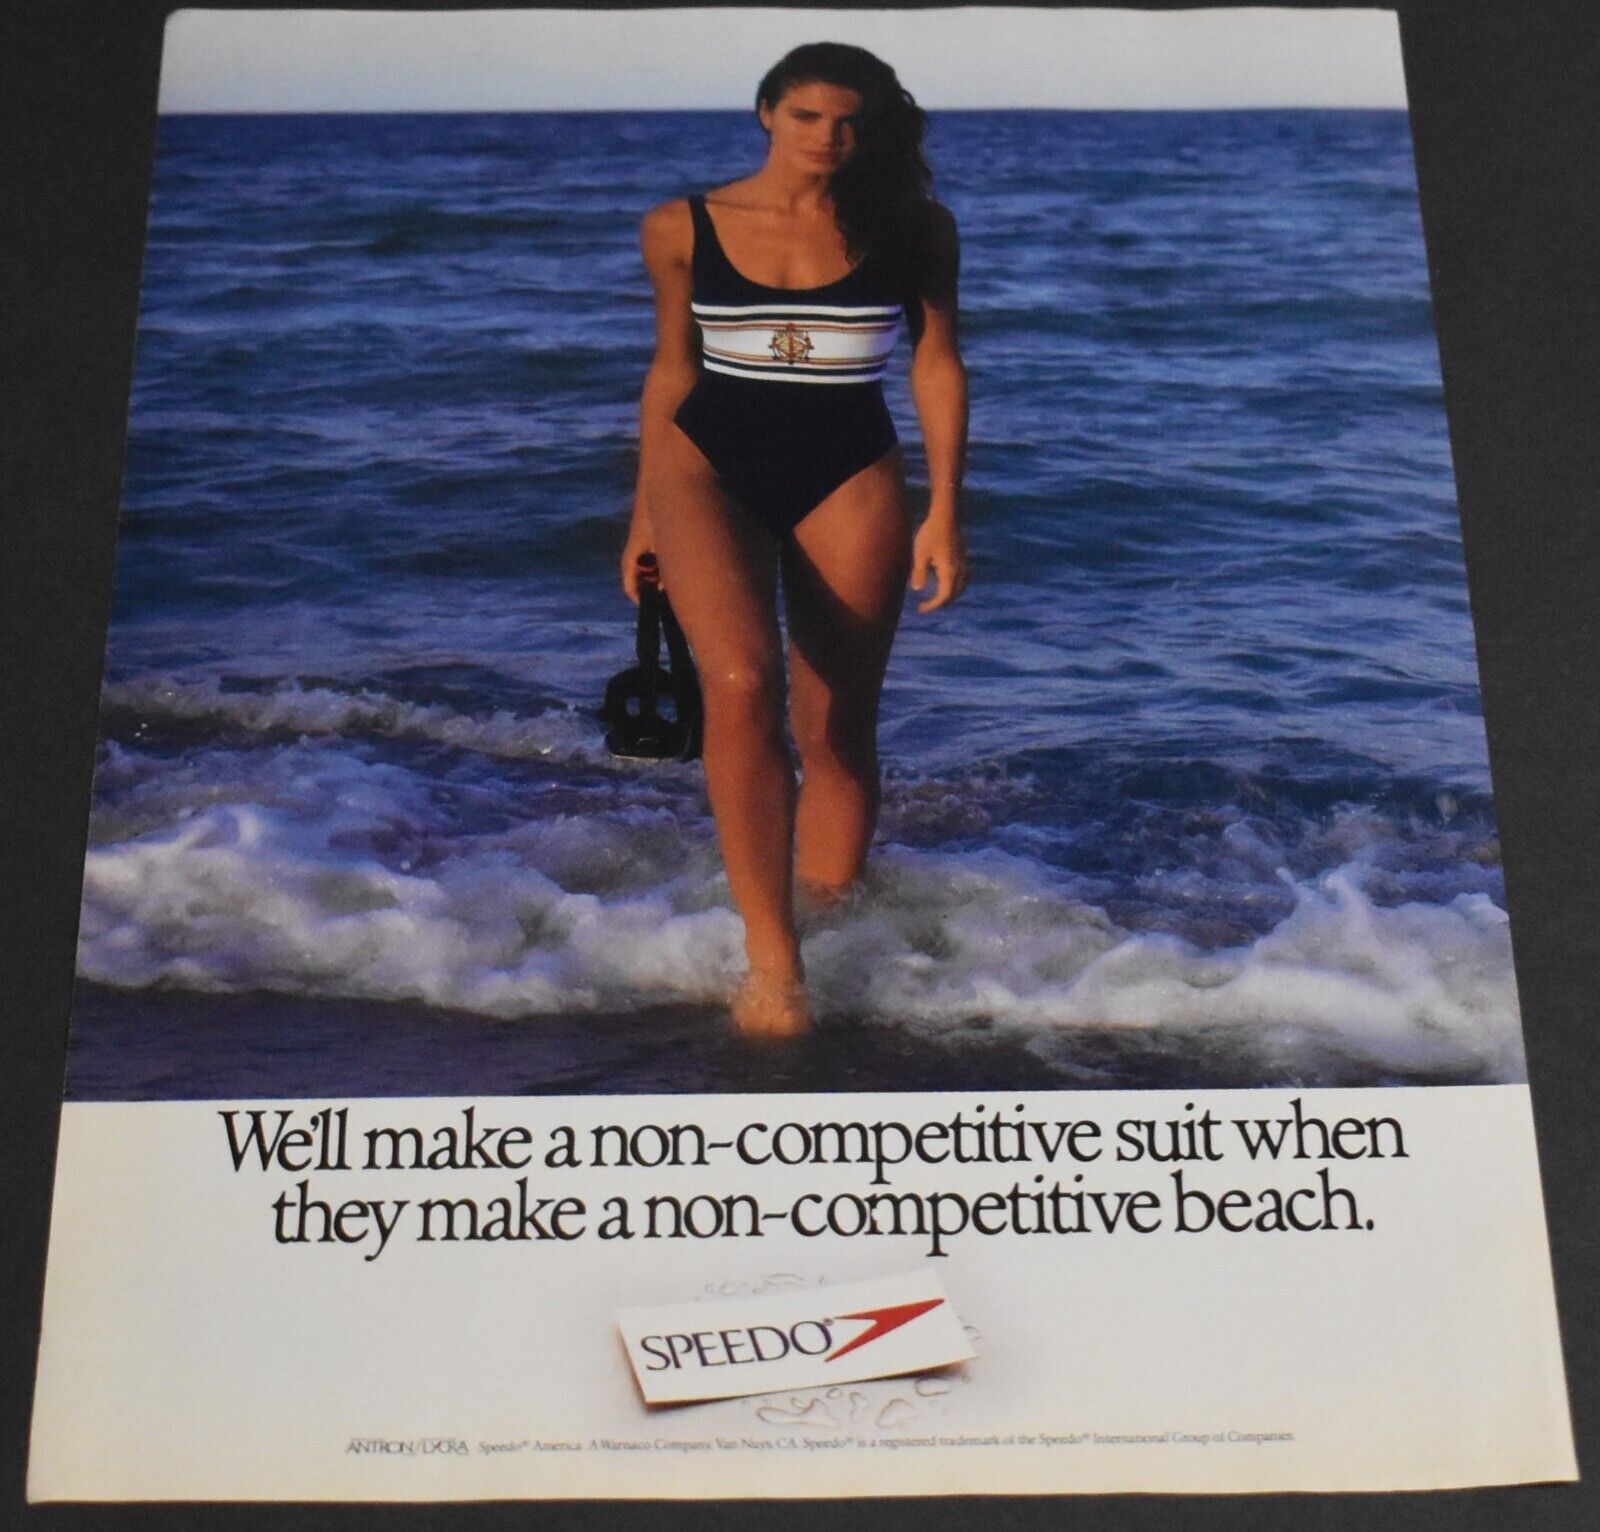 1989 Print Ad Sexy Swimwear Fashion Lady Long Legs Beach Art Speedo Brunette art